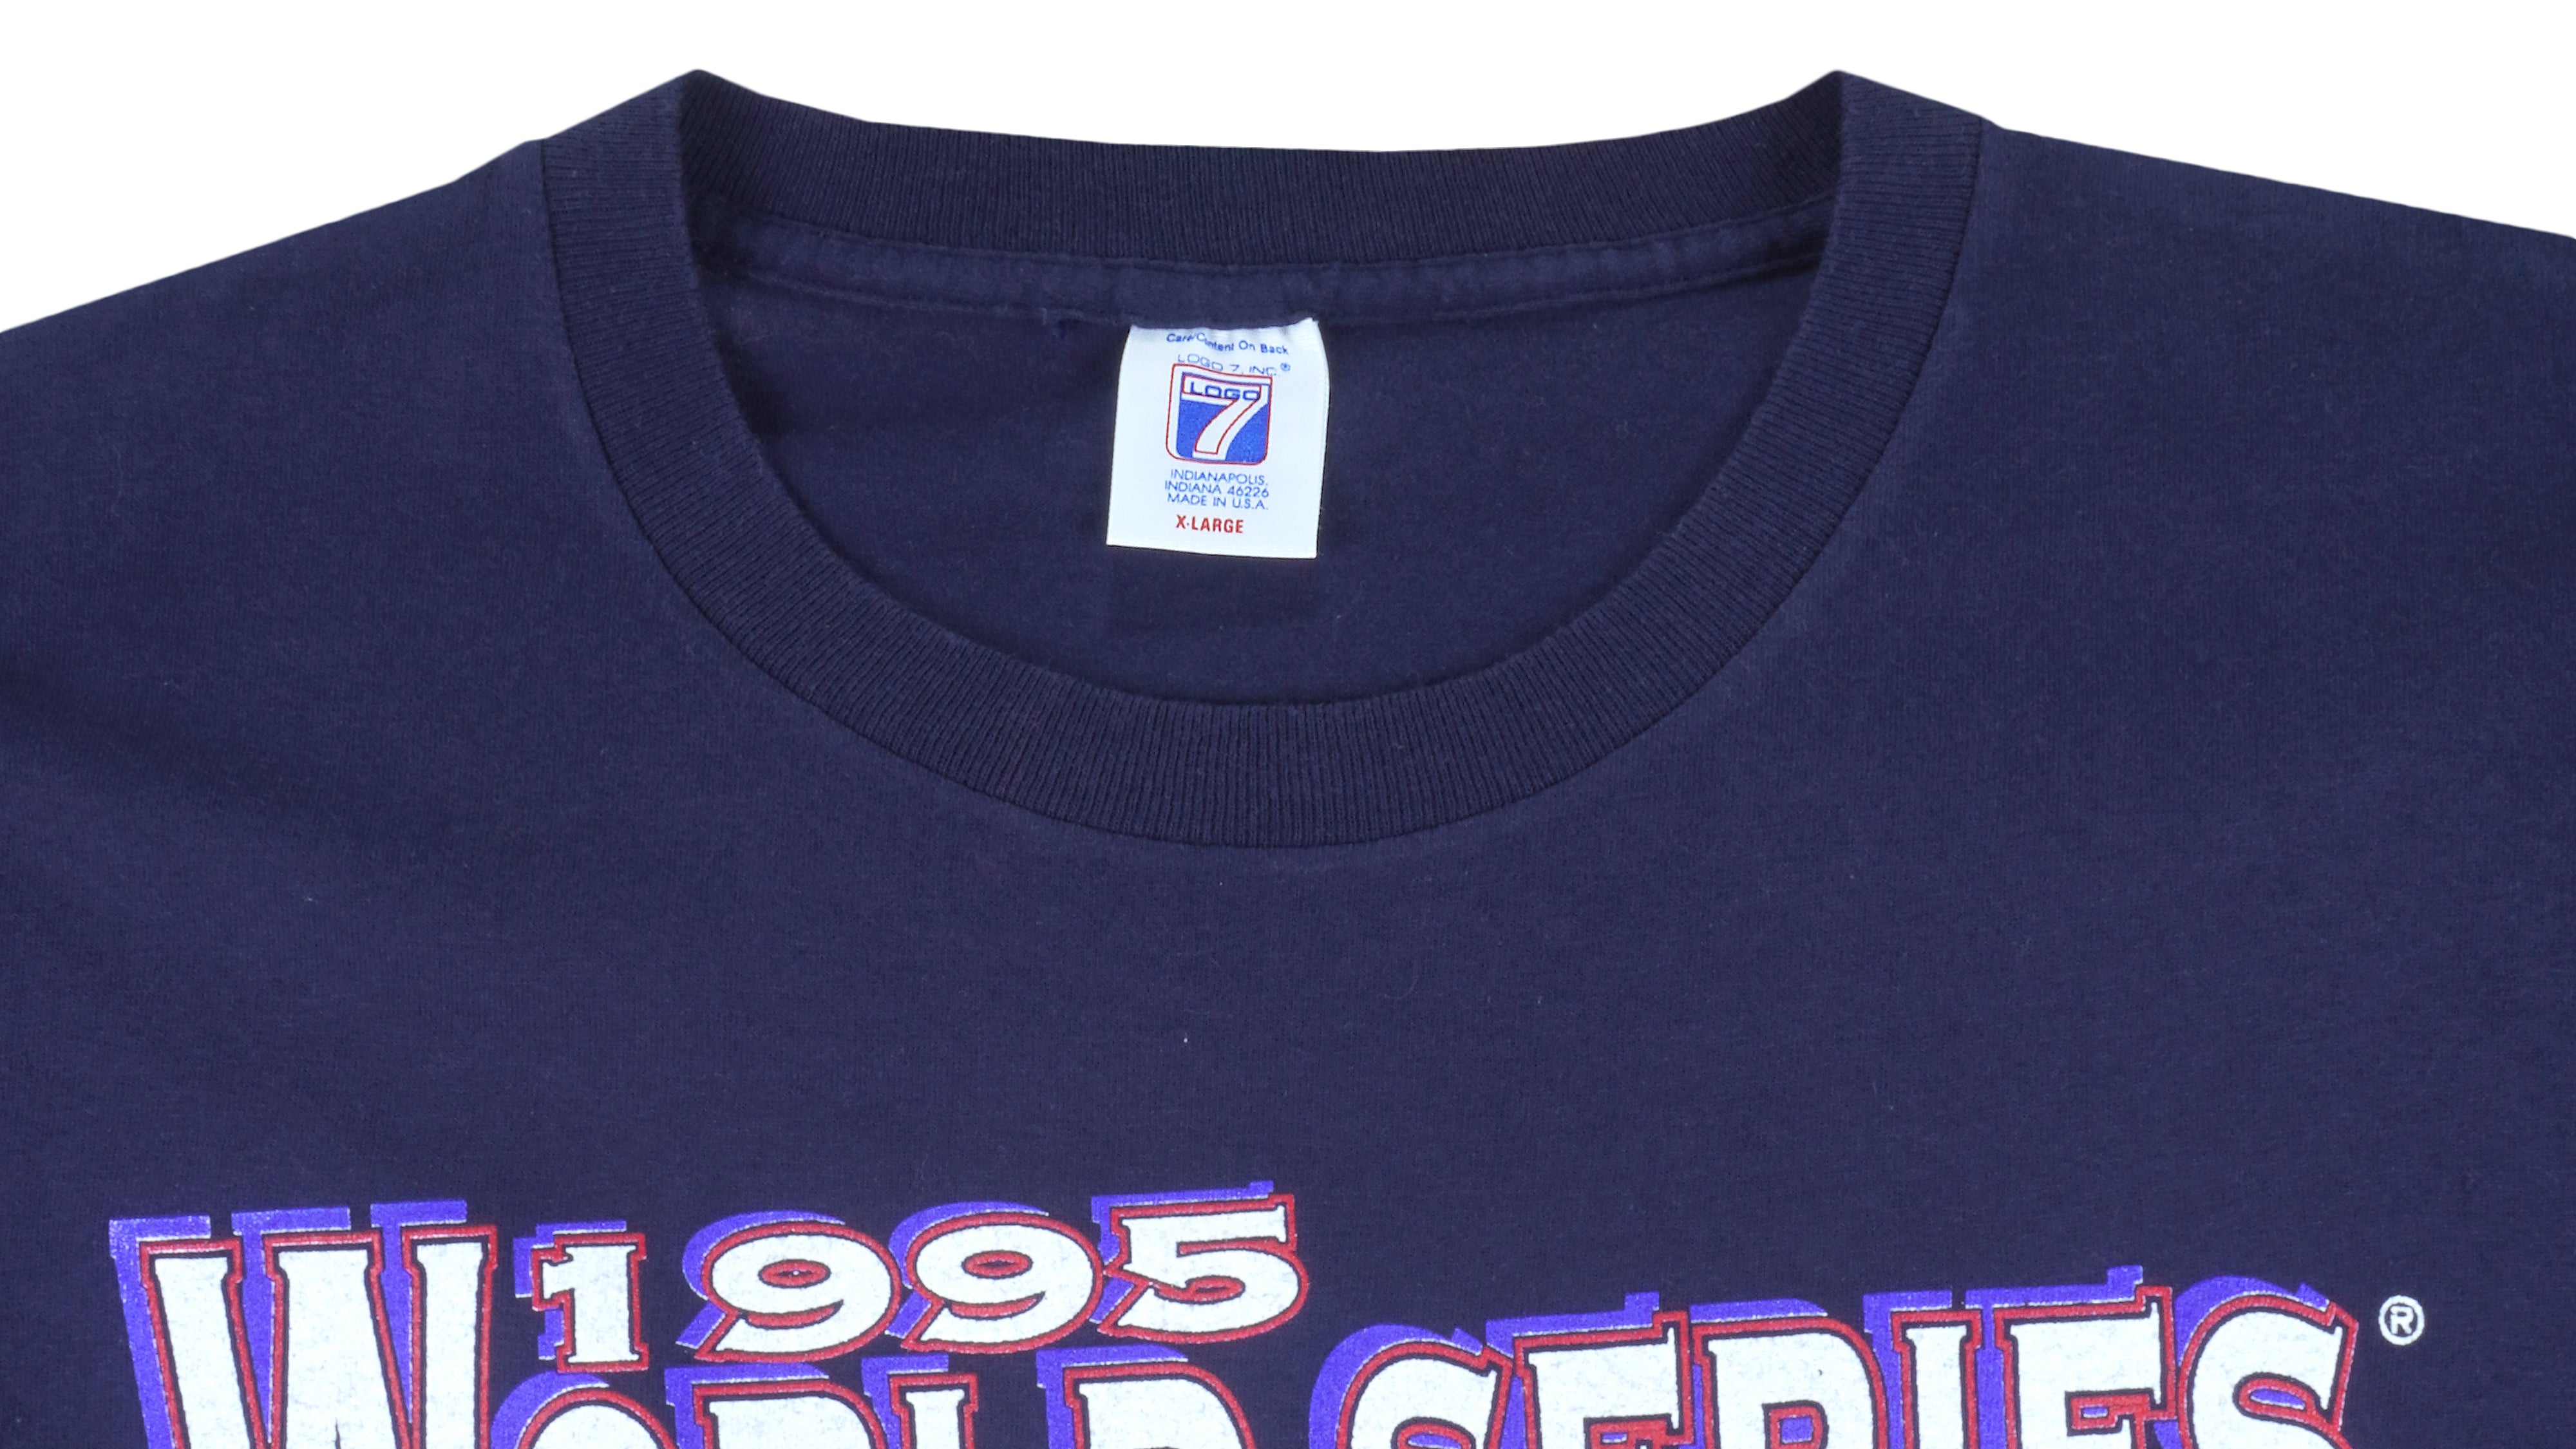 Official vintage 1995 Atlanta Braves World Series Champions shirt